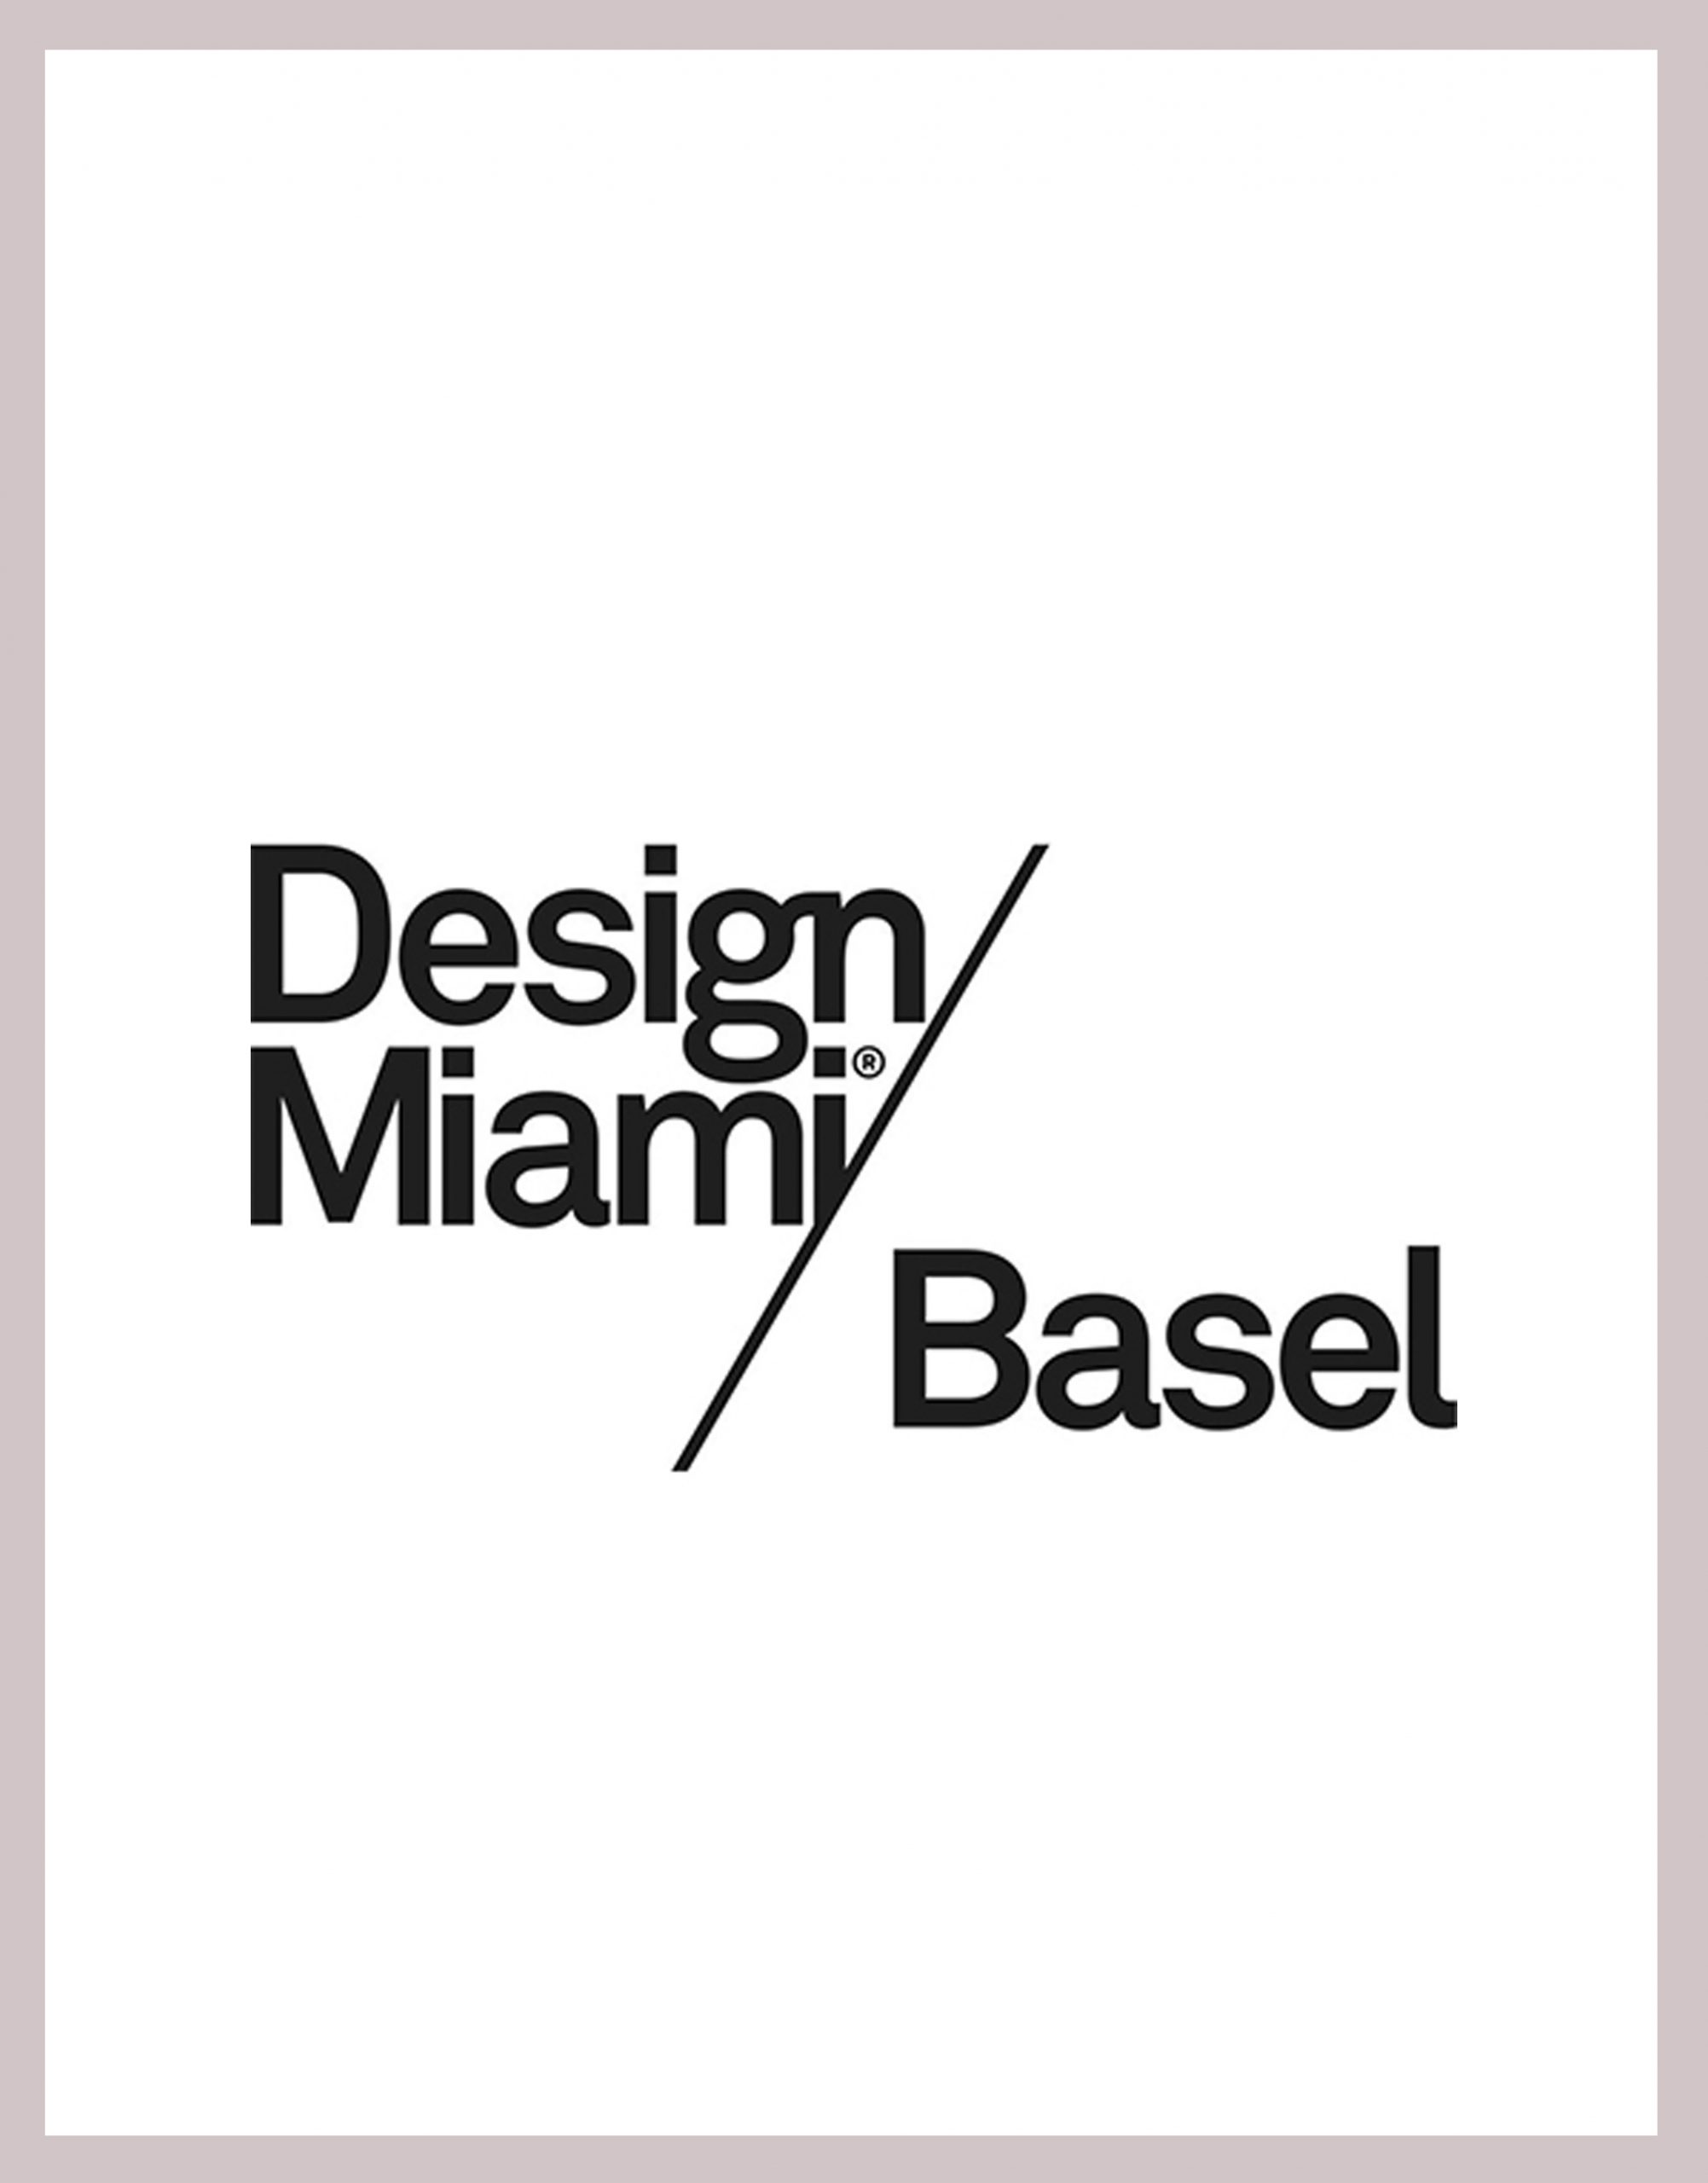 Konstantin Grcic - Design Miami / Basel 2016